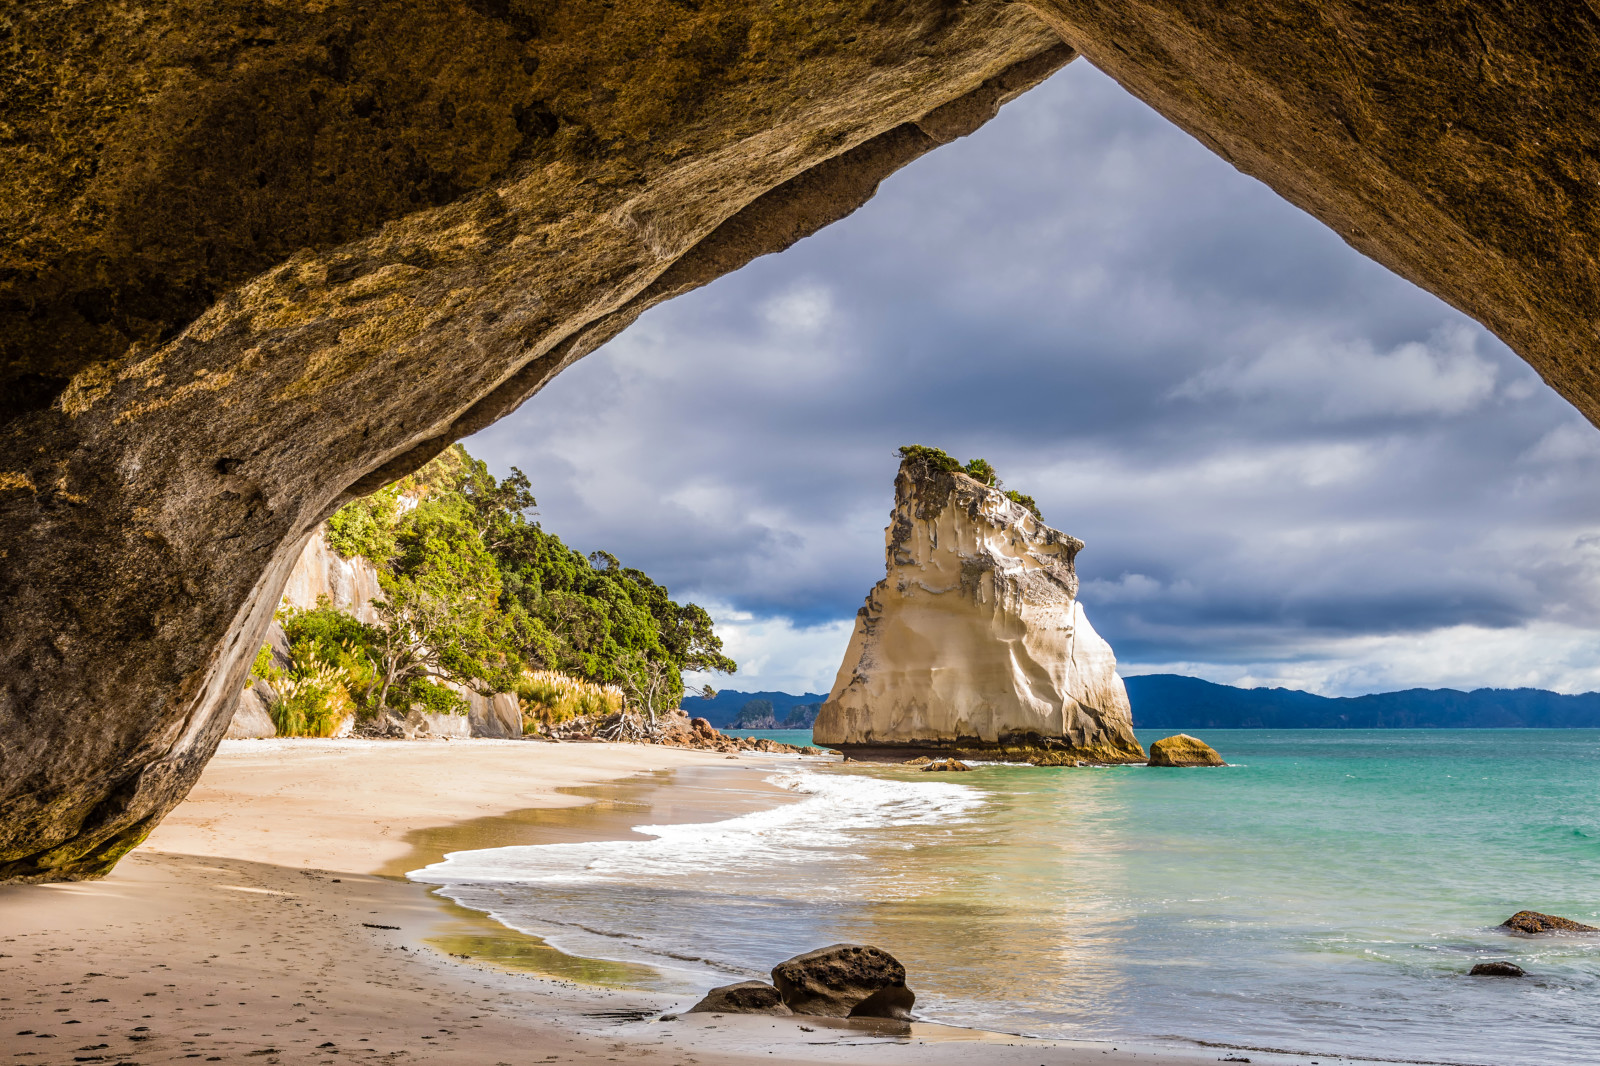 đá, biển, đá, bờ biển, cát, New Zealand